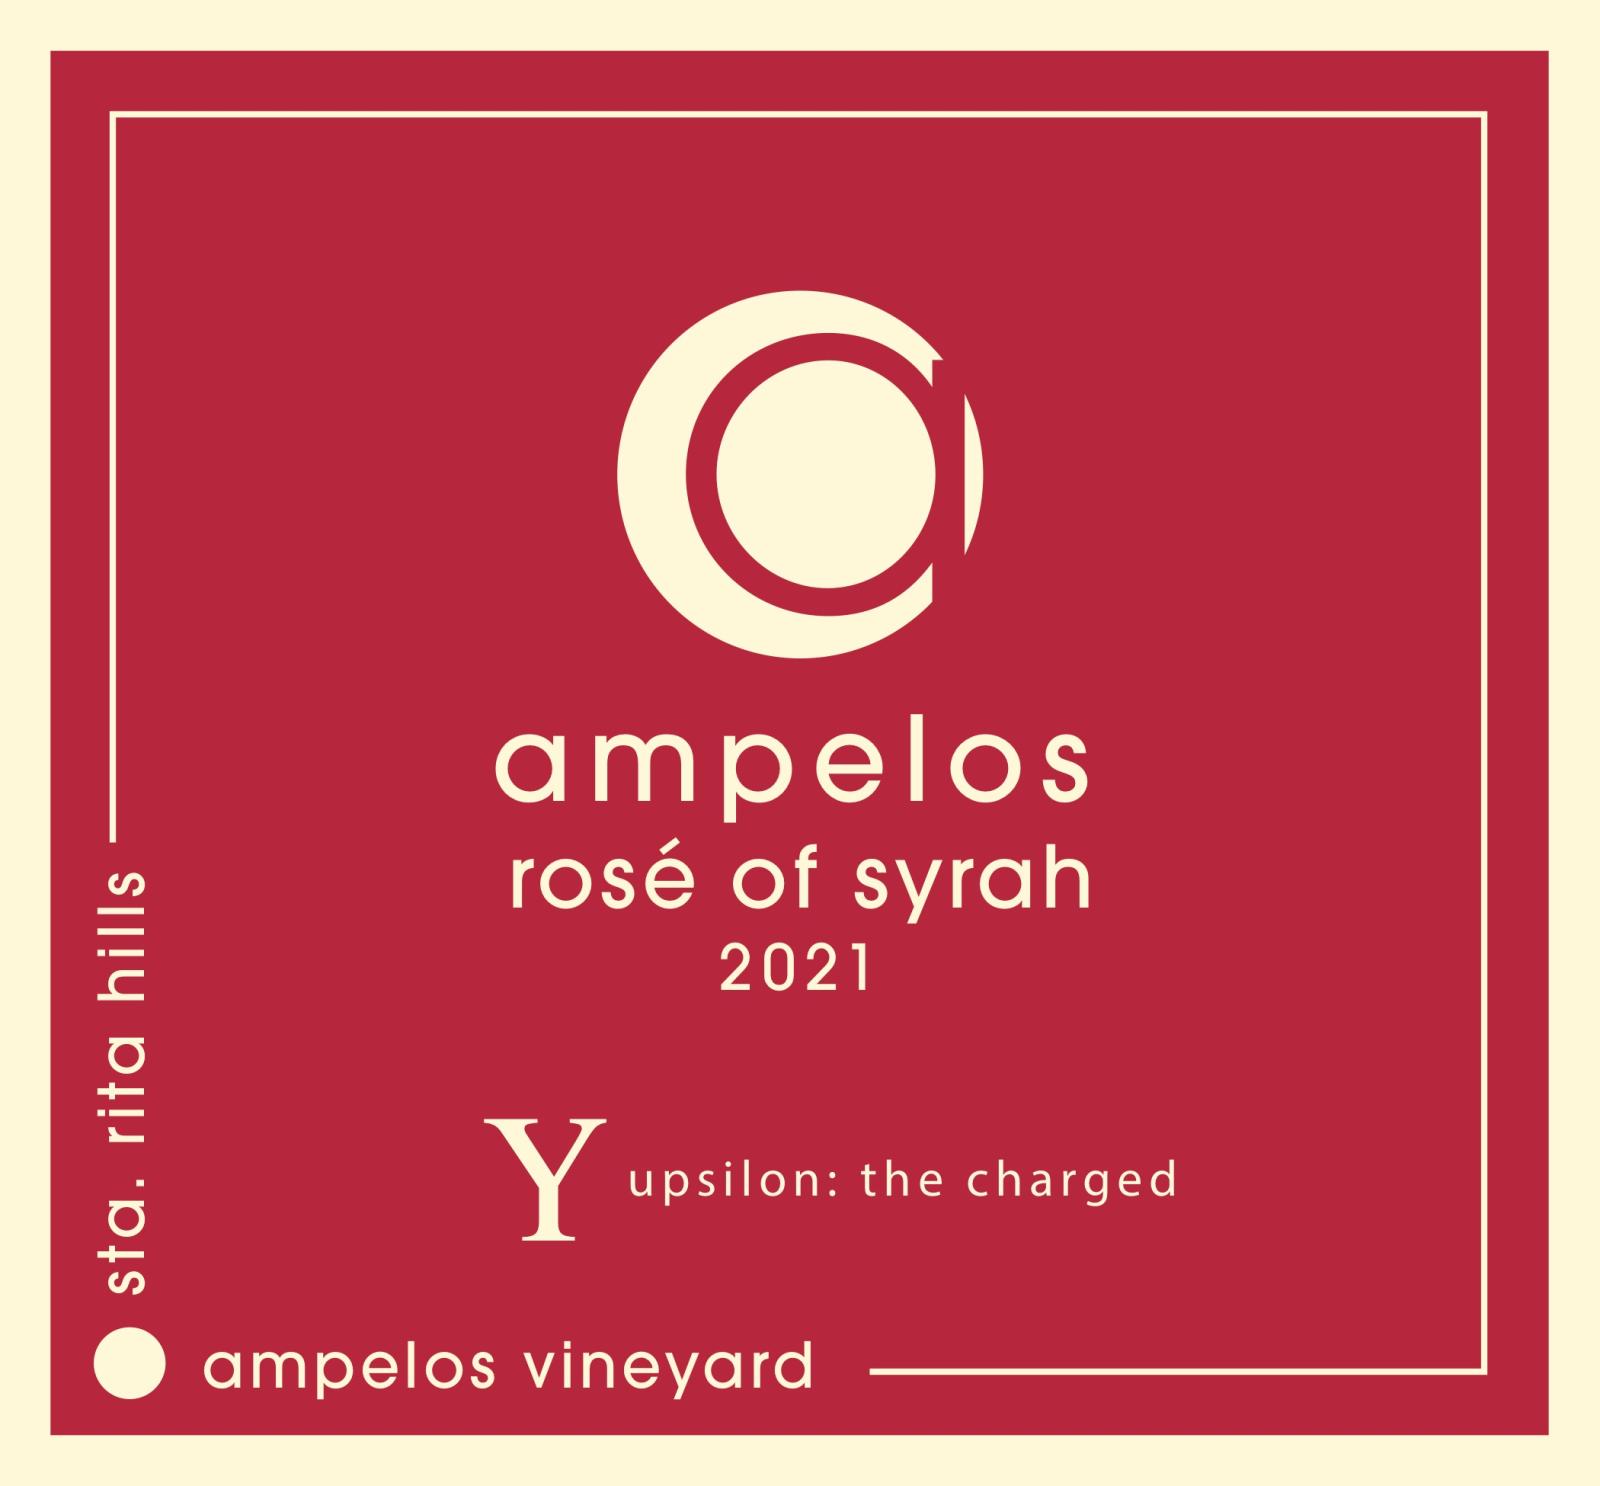 ampelos cellars rose of syrah 2021